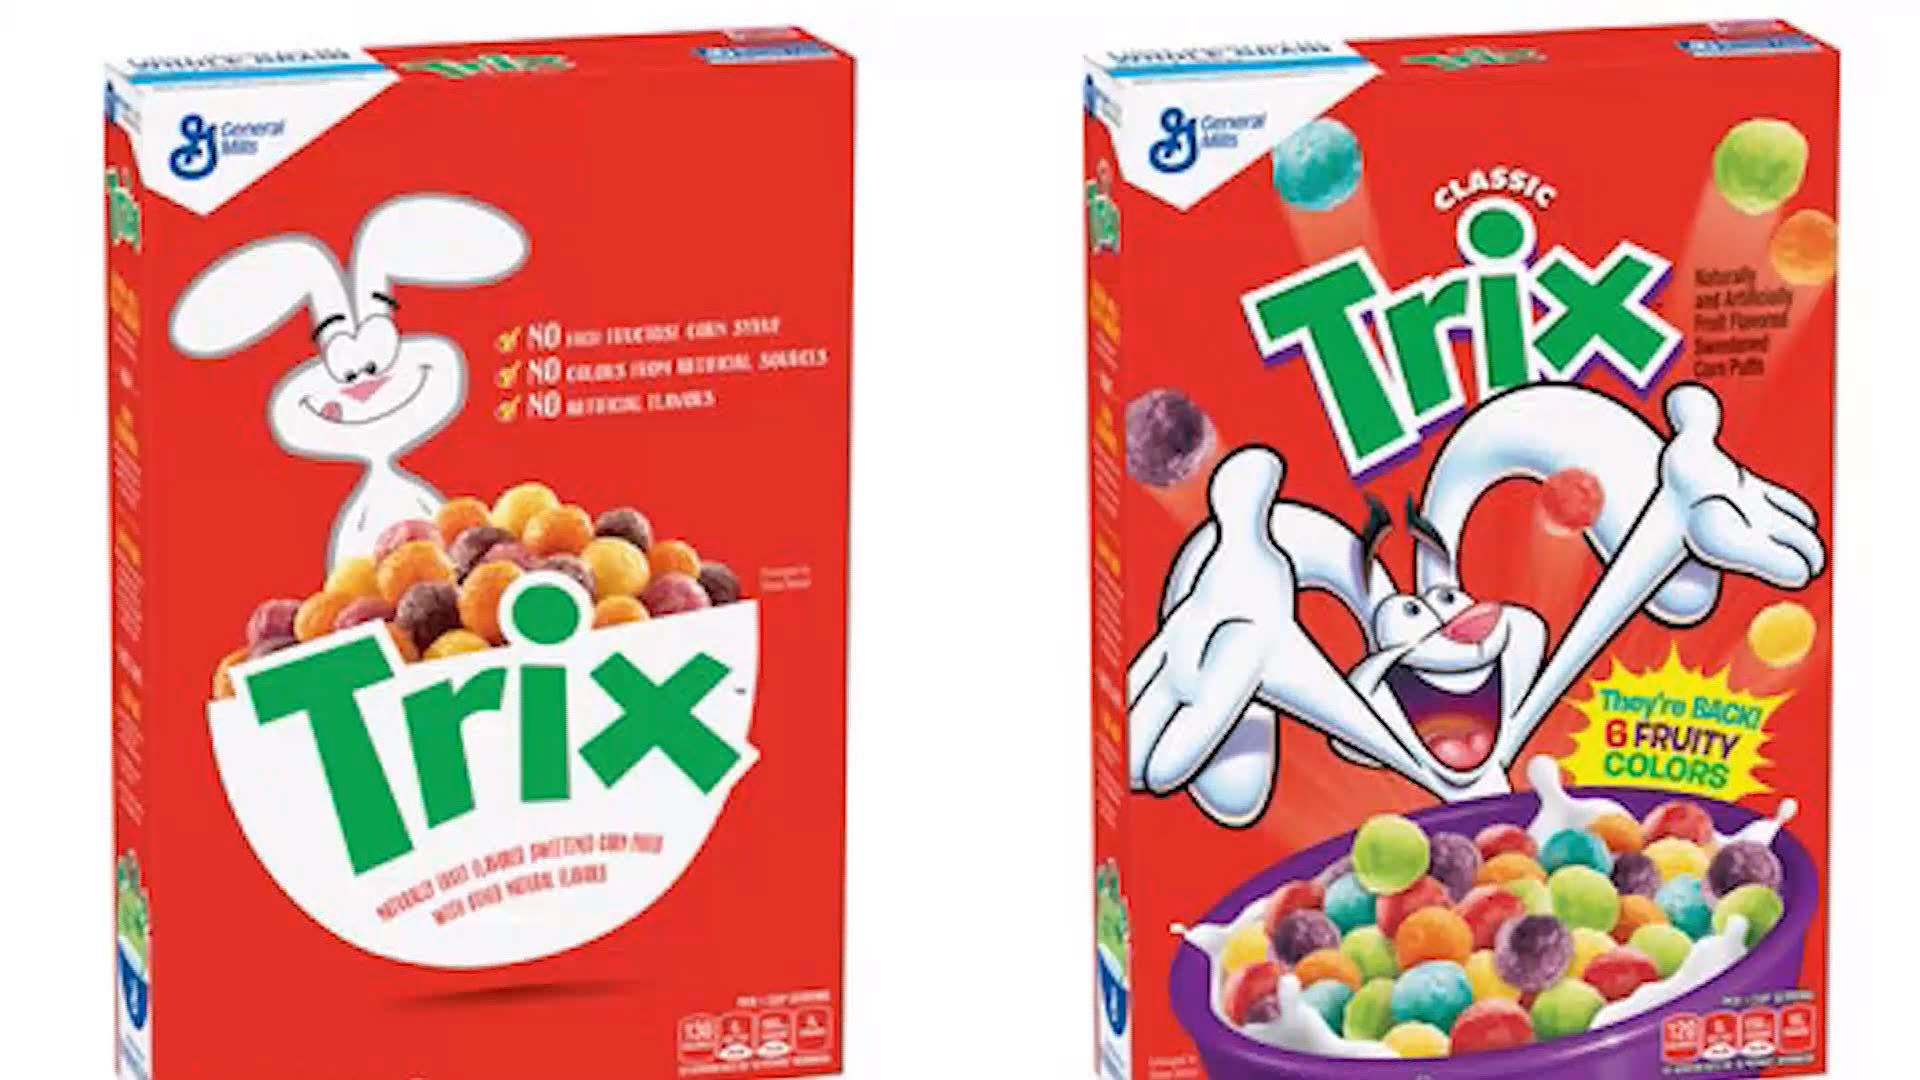 trix cereal box 2022